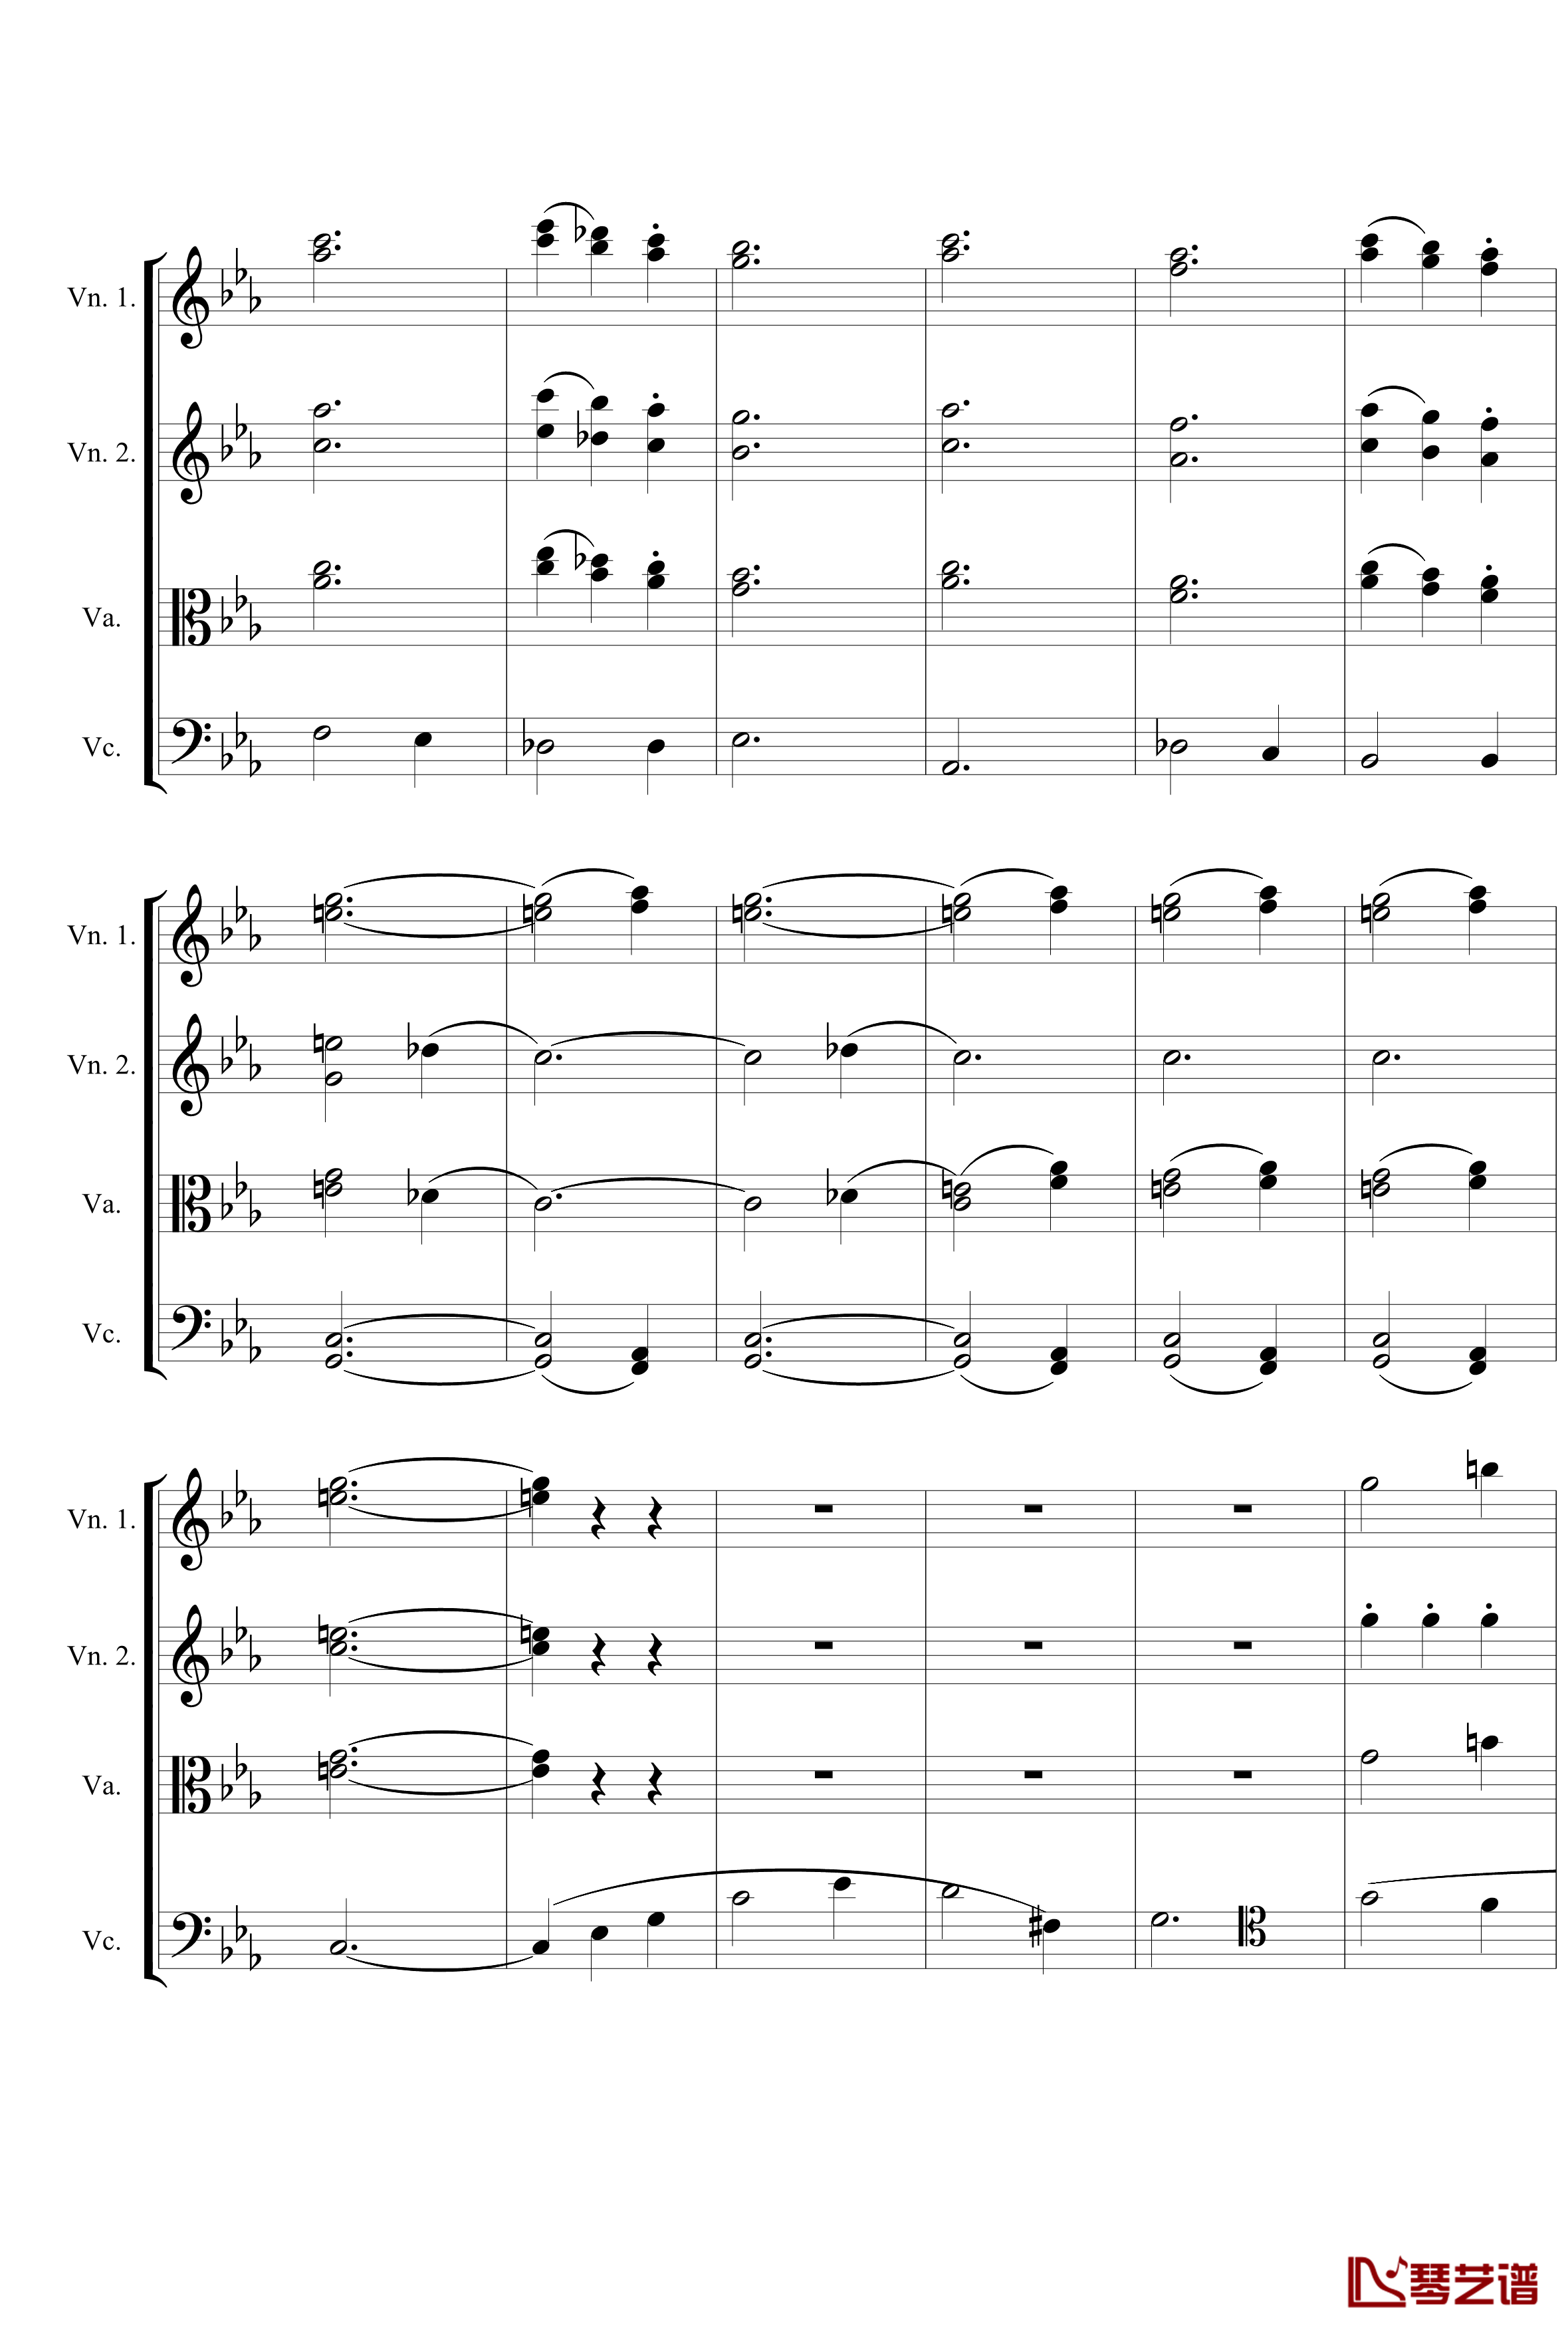 Symphony No.5 in C Minor 3rd钢琴谱-String quartet-贝多芬-beethoven7